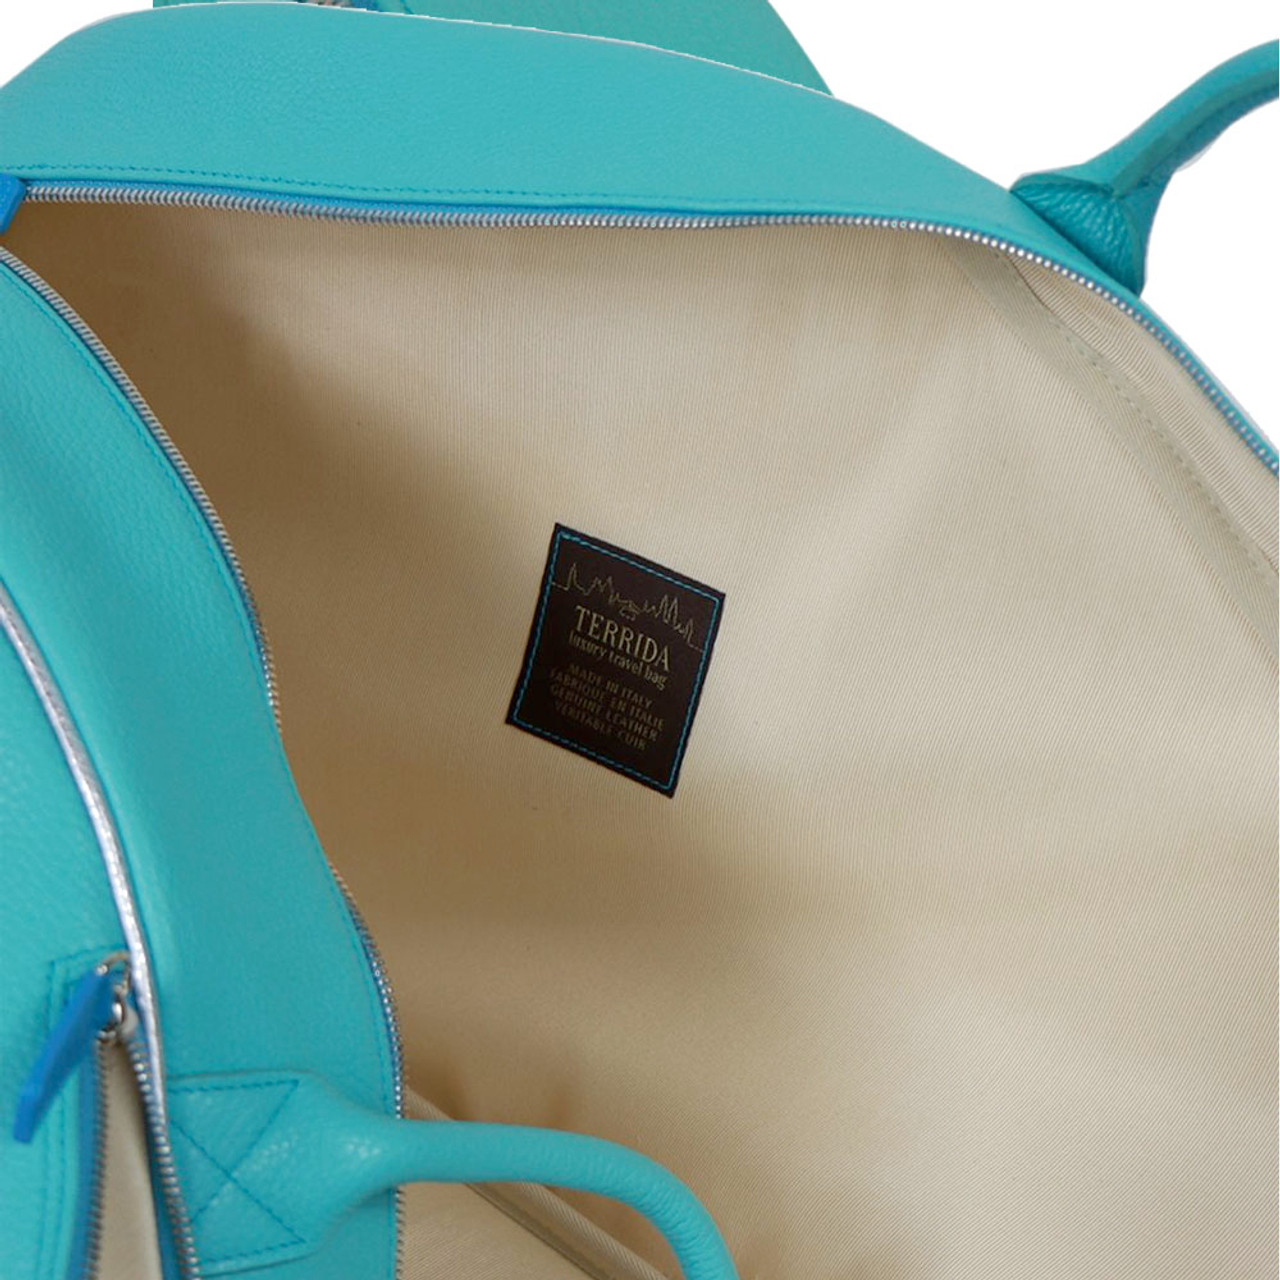 Luxury Tennis Backpack Exclusive Leather Tennis Bag Luxury 